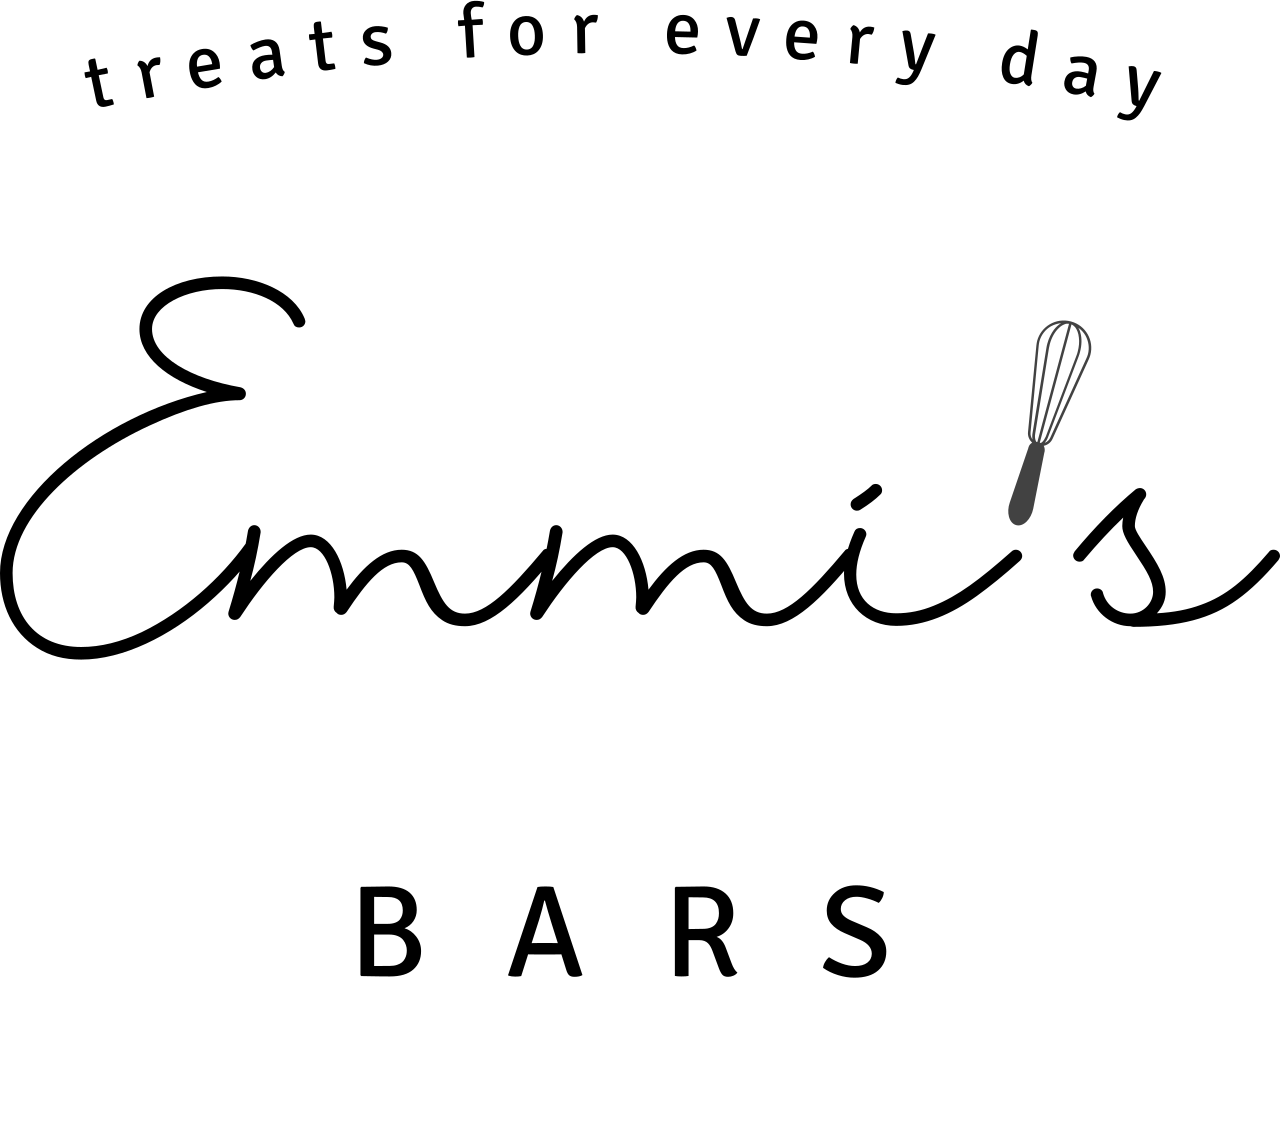 Emmi s's web page